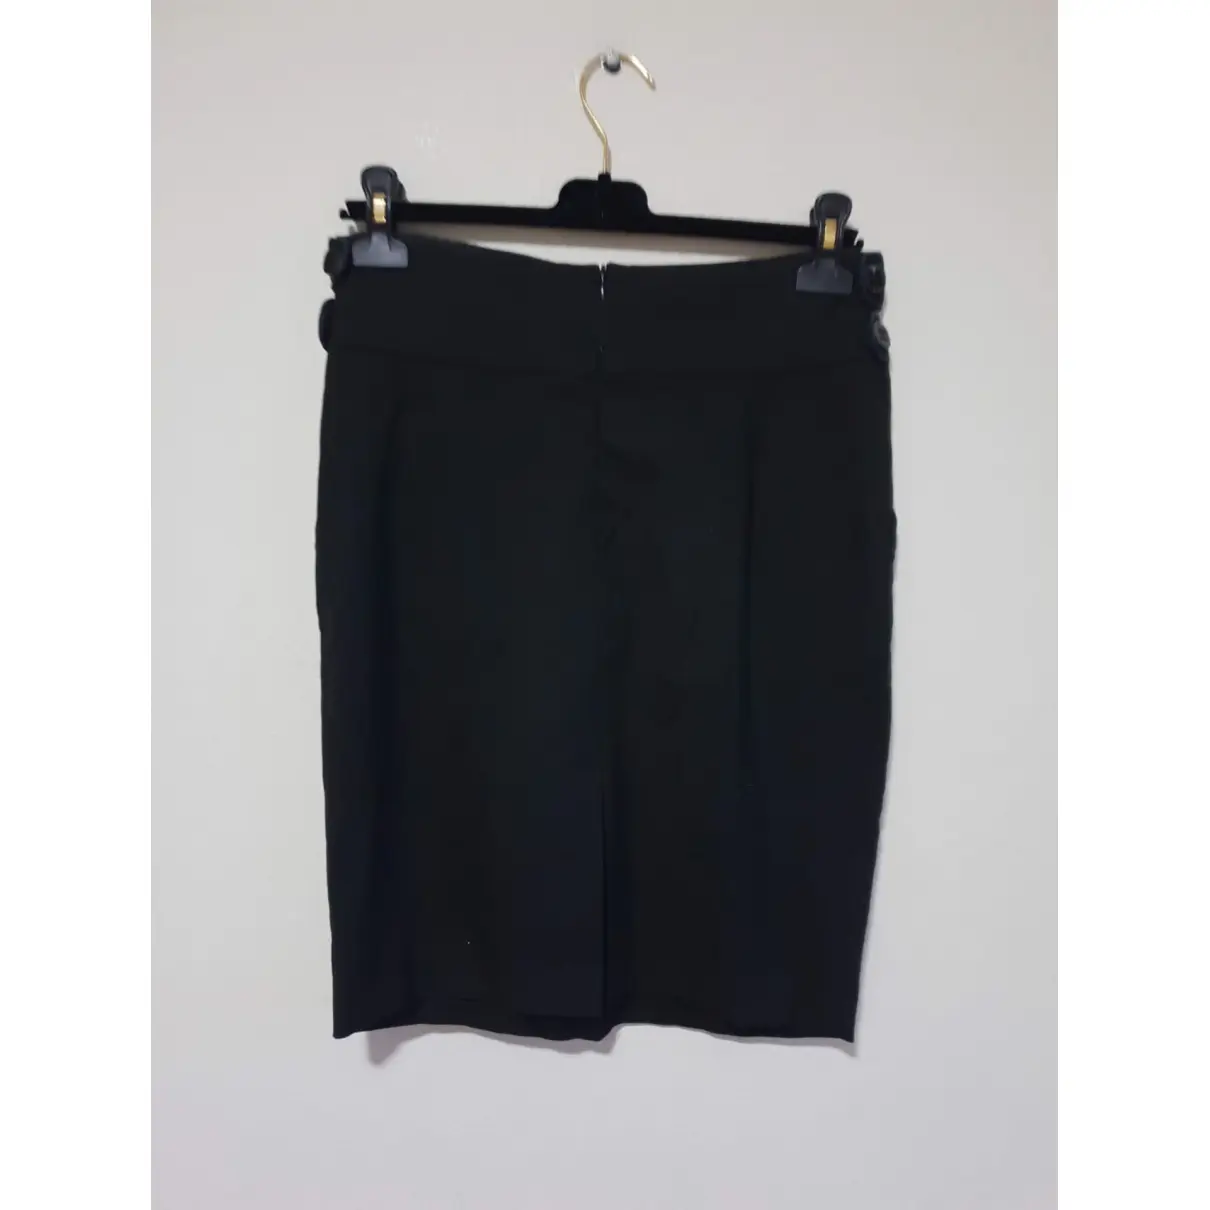 Buy MORGAN Mid-length skirt online